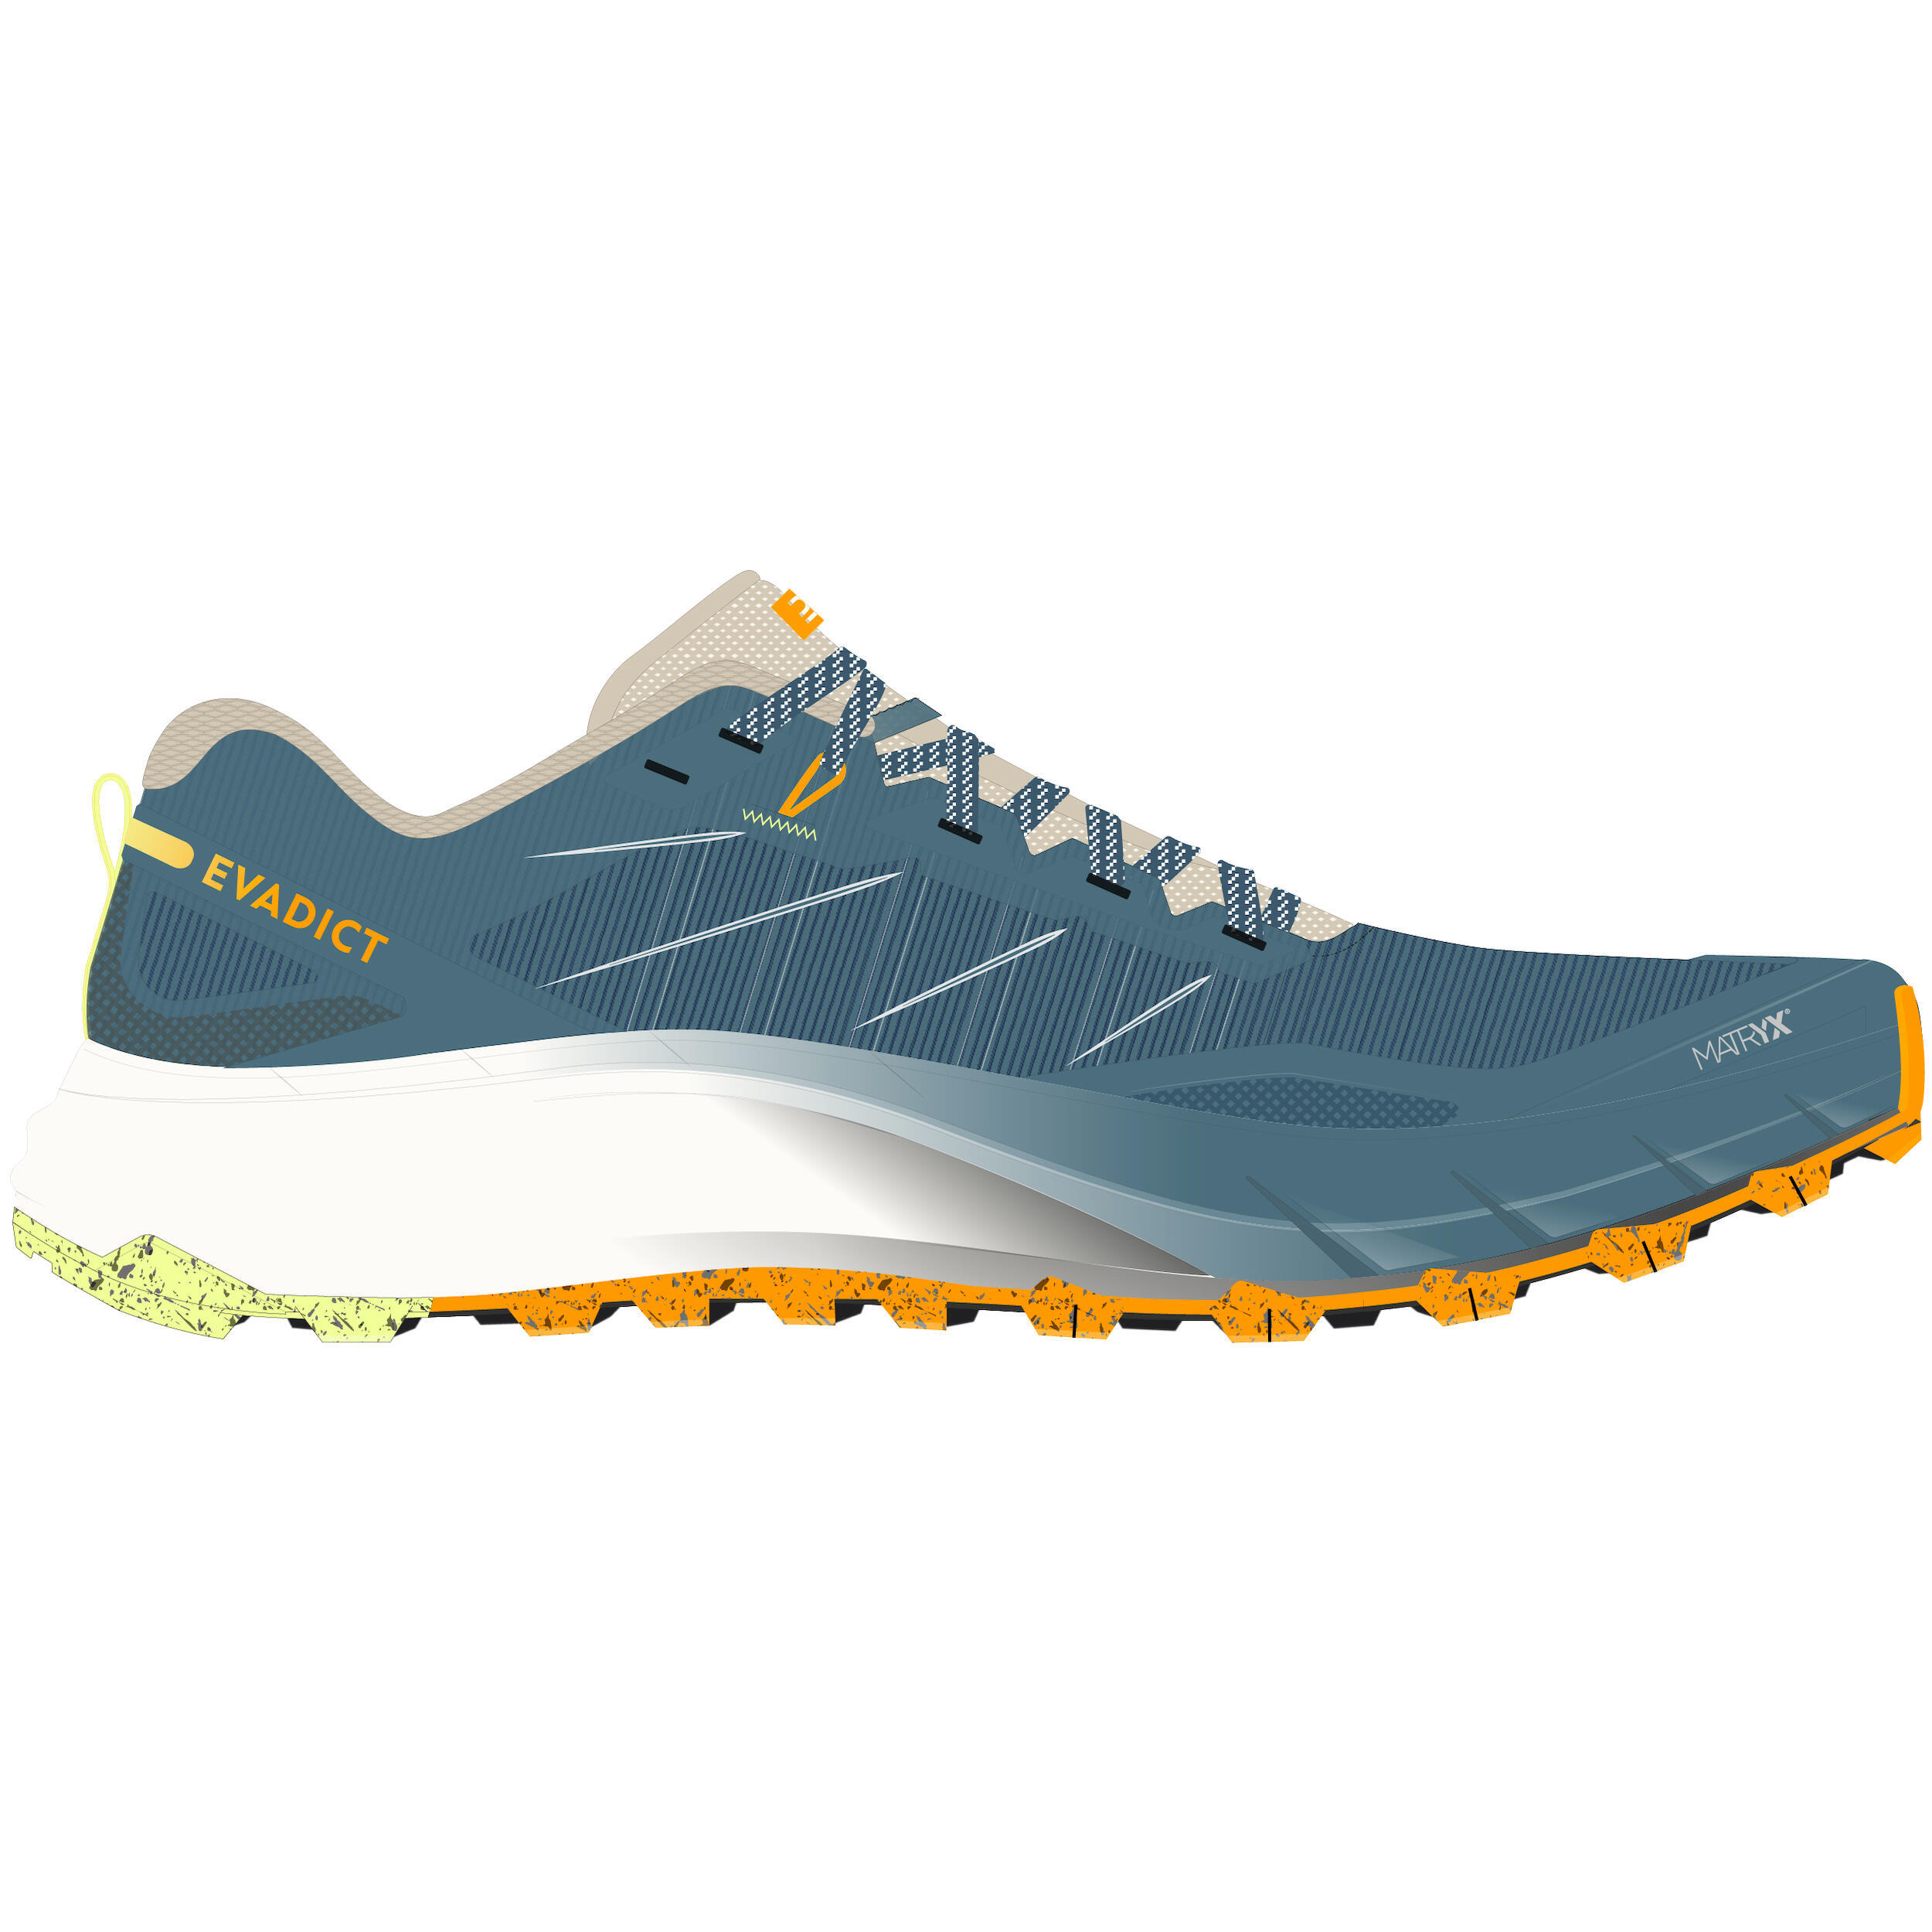 EVADICT MT CUSHION 2 men's trail running shoe - Turquoise 54/55